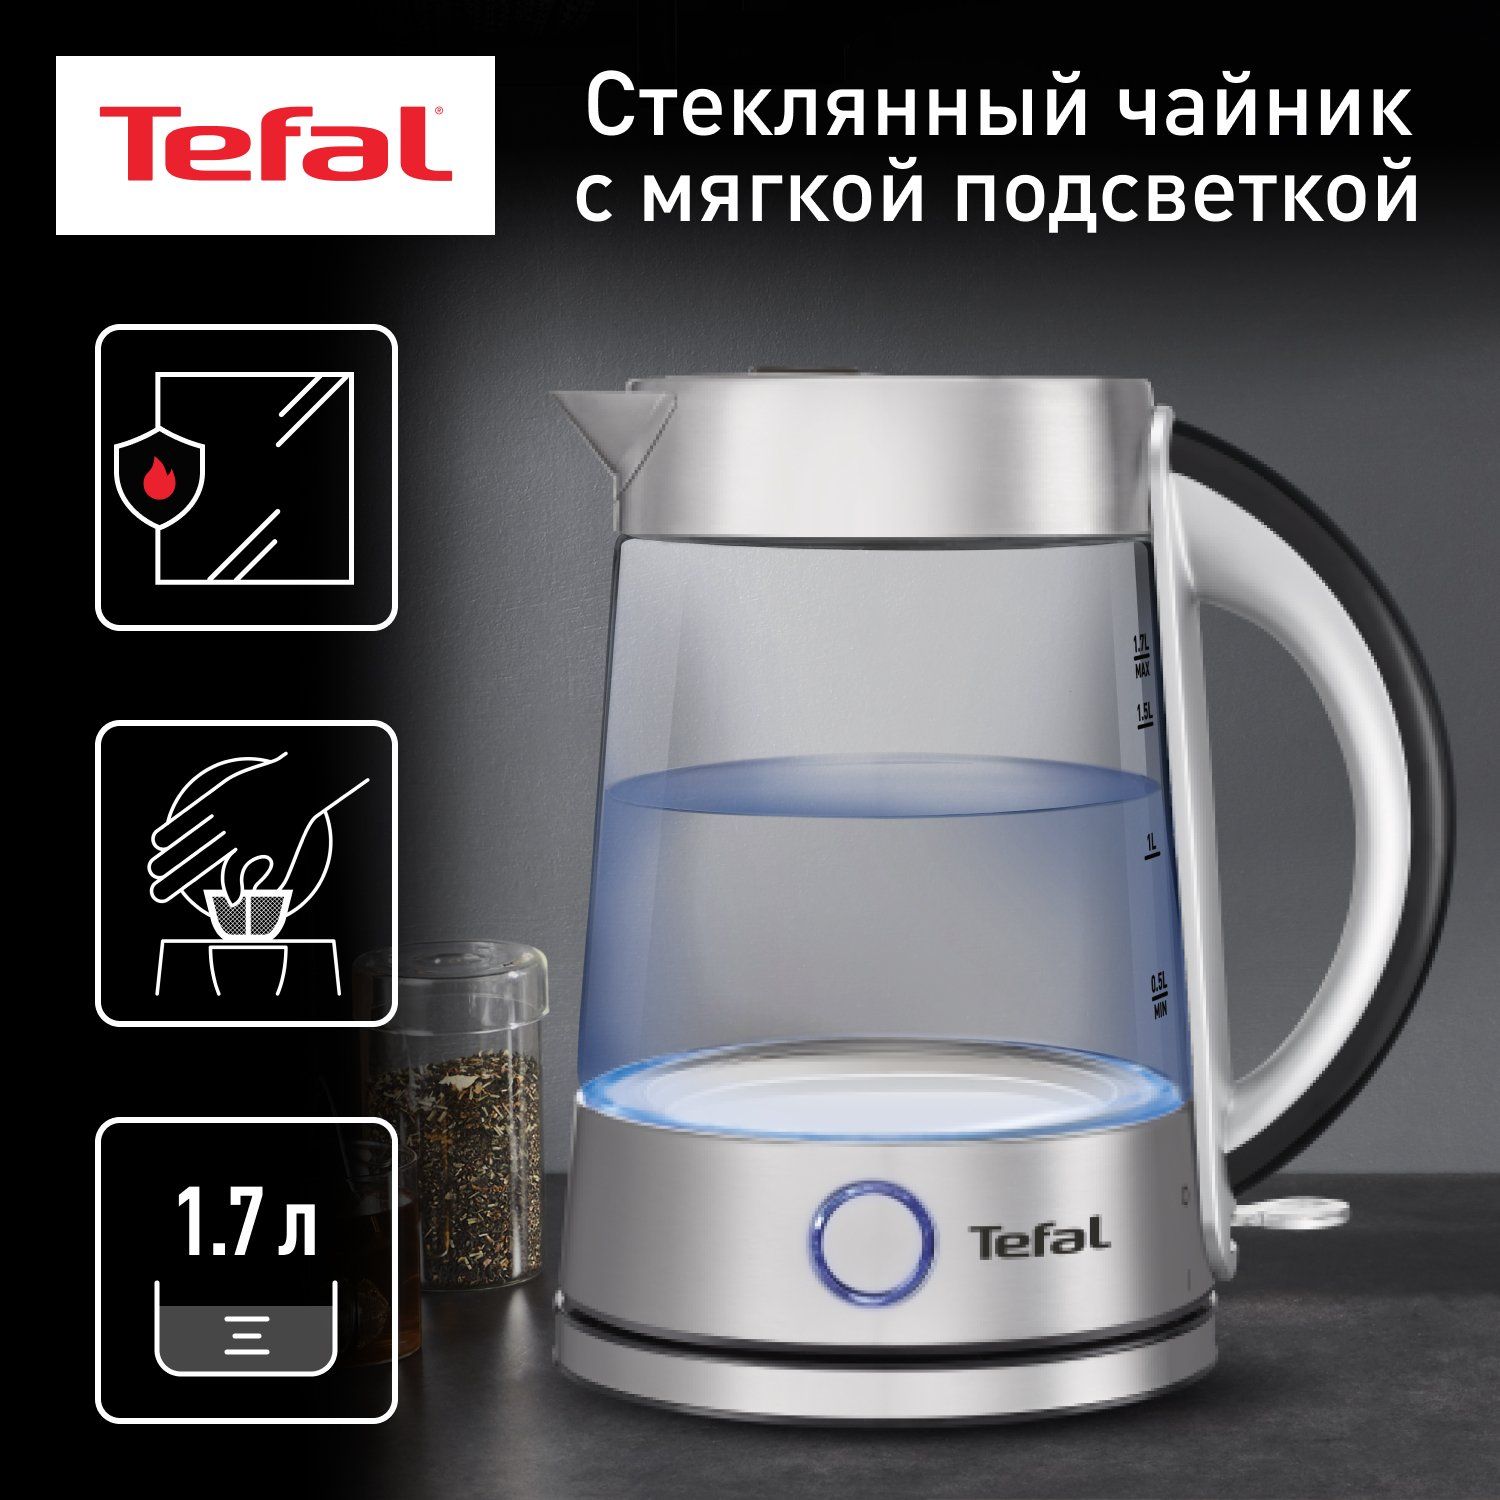 Чайник электрический Tefal Glass Kettle KI760D30, 1.7 л, серебристый/черный чайник электрический tefal glass ko450832 1 7 л